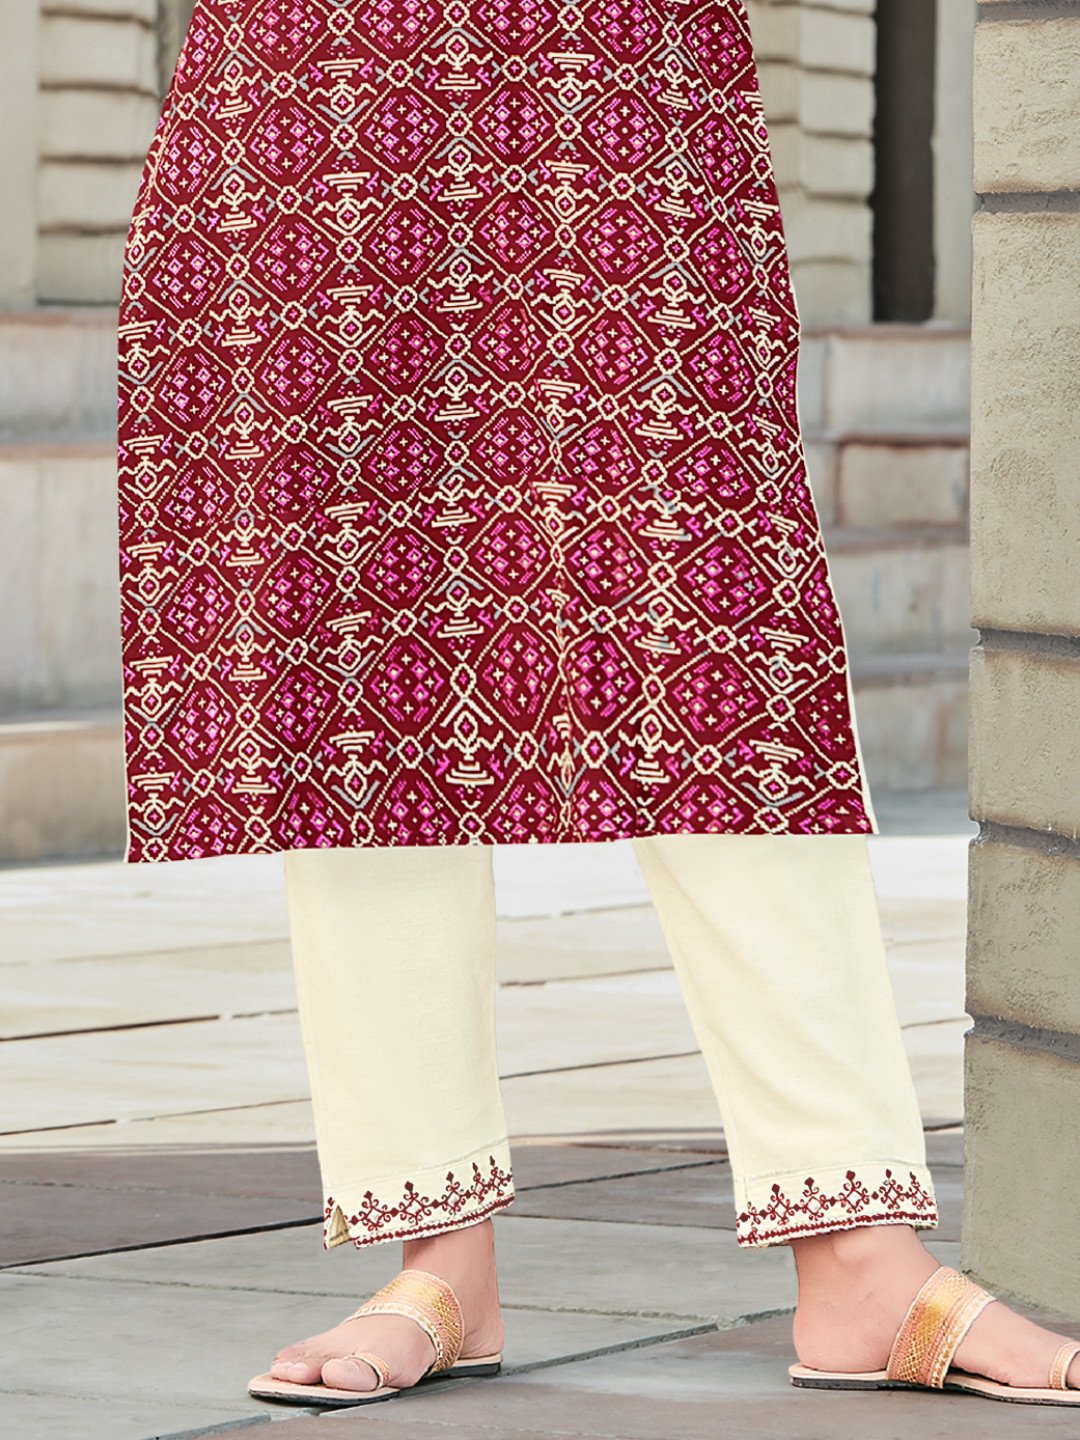 Traditional Indian Men's Outfit,Men's Yellow Kurta White Pant Set,Christmas  Gift | eBay